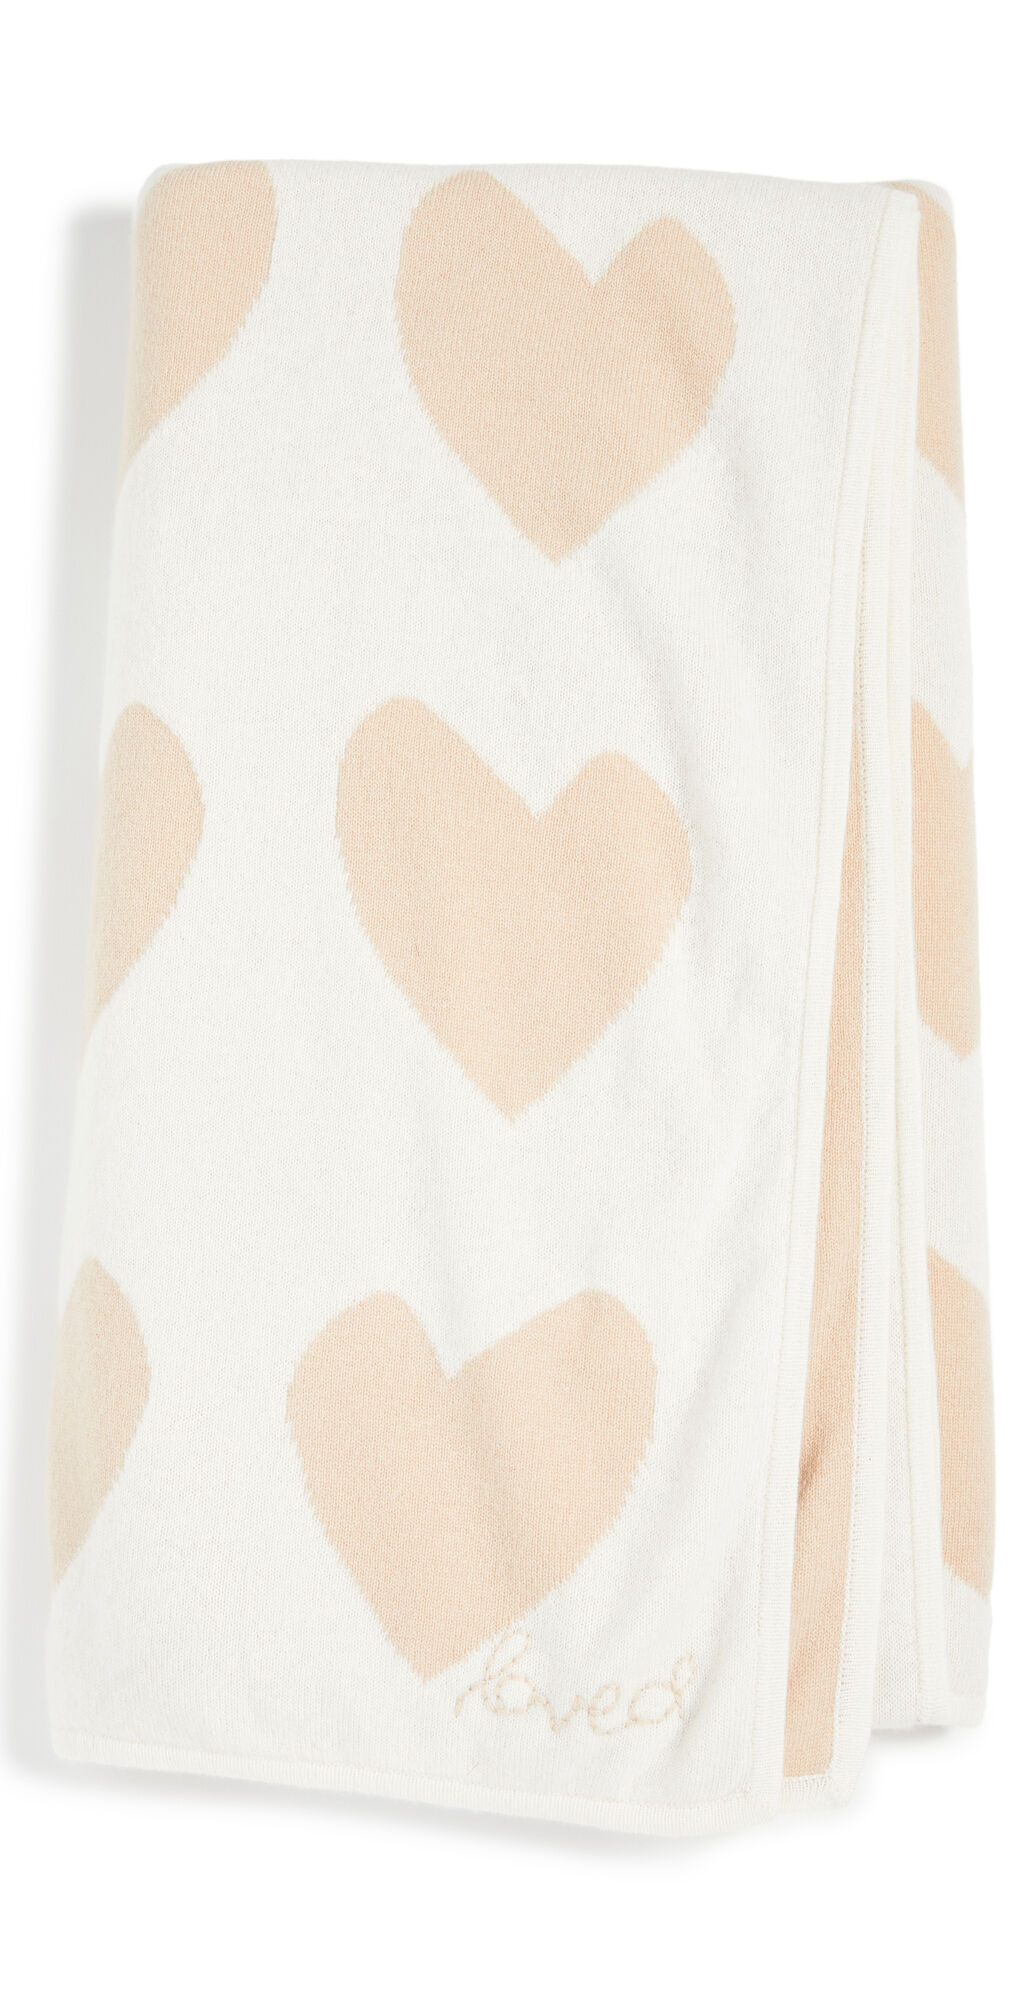 Kerri Rosenthal Imperfect Love Cashmere Blanket Oatmilk One Size  Oatmilk  size:One Size